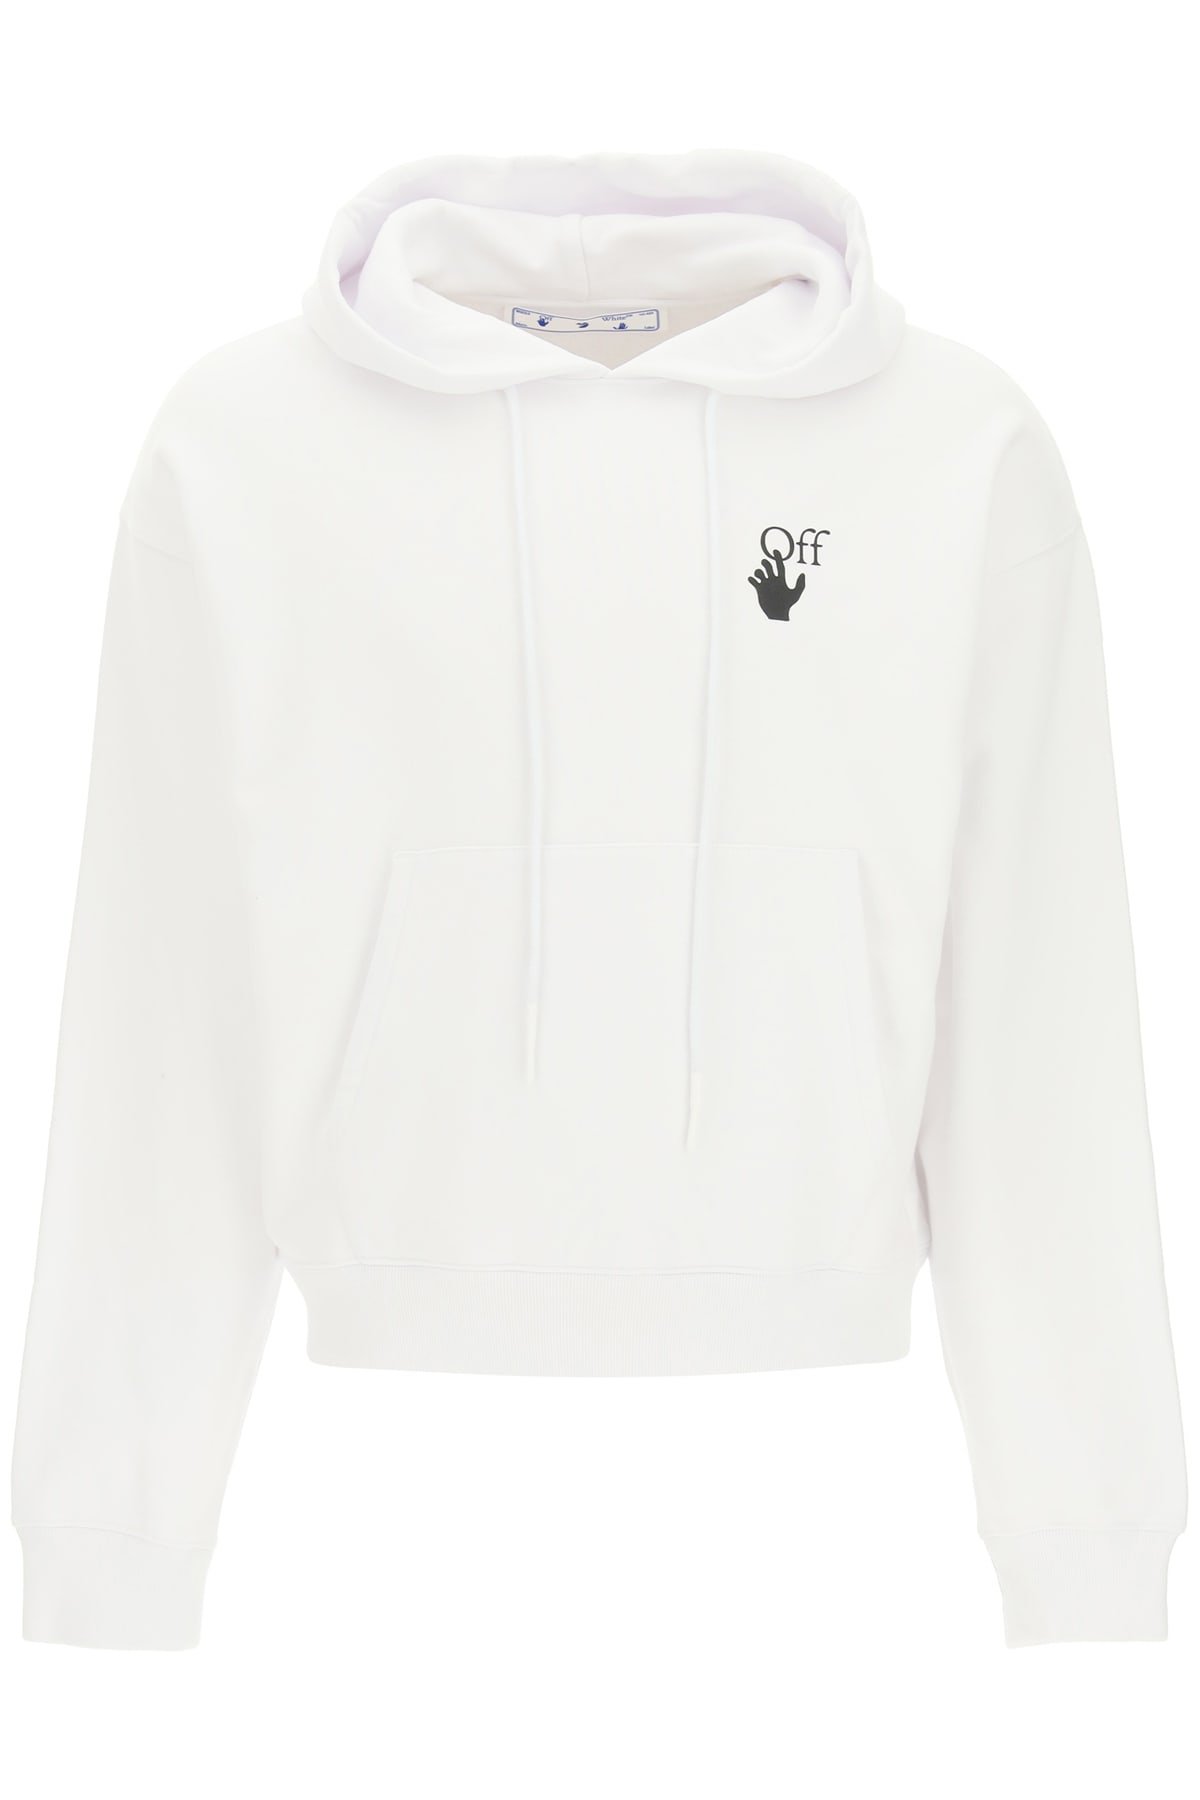 Off-White Caravaggio Lute Print Sweatshirt With Hoodie